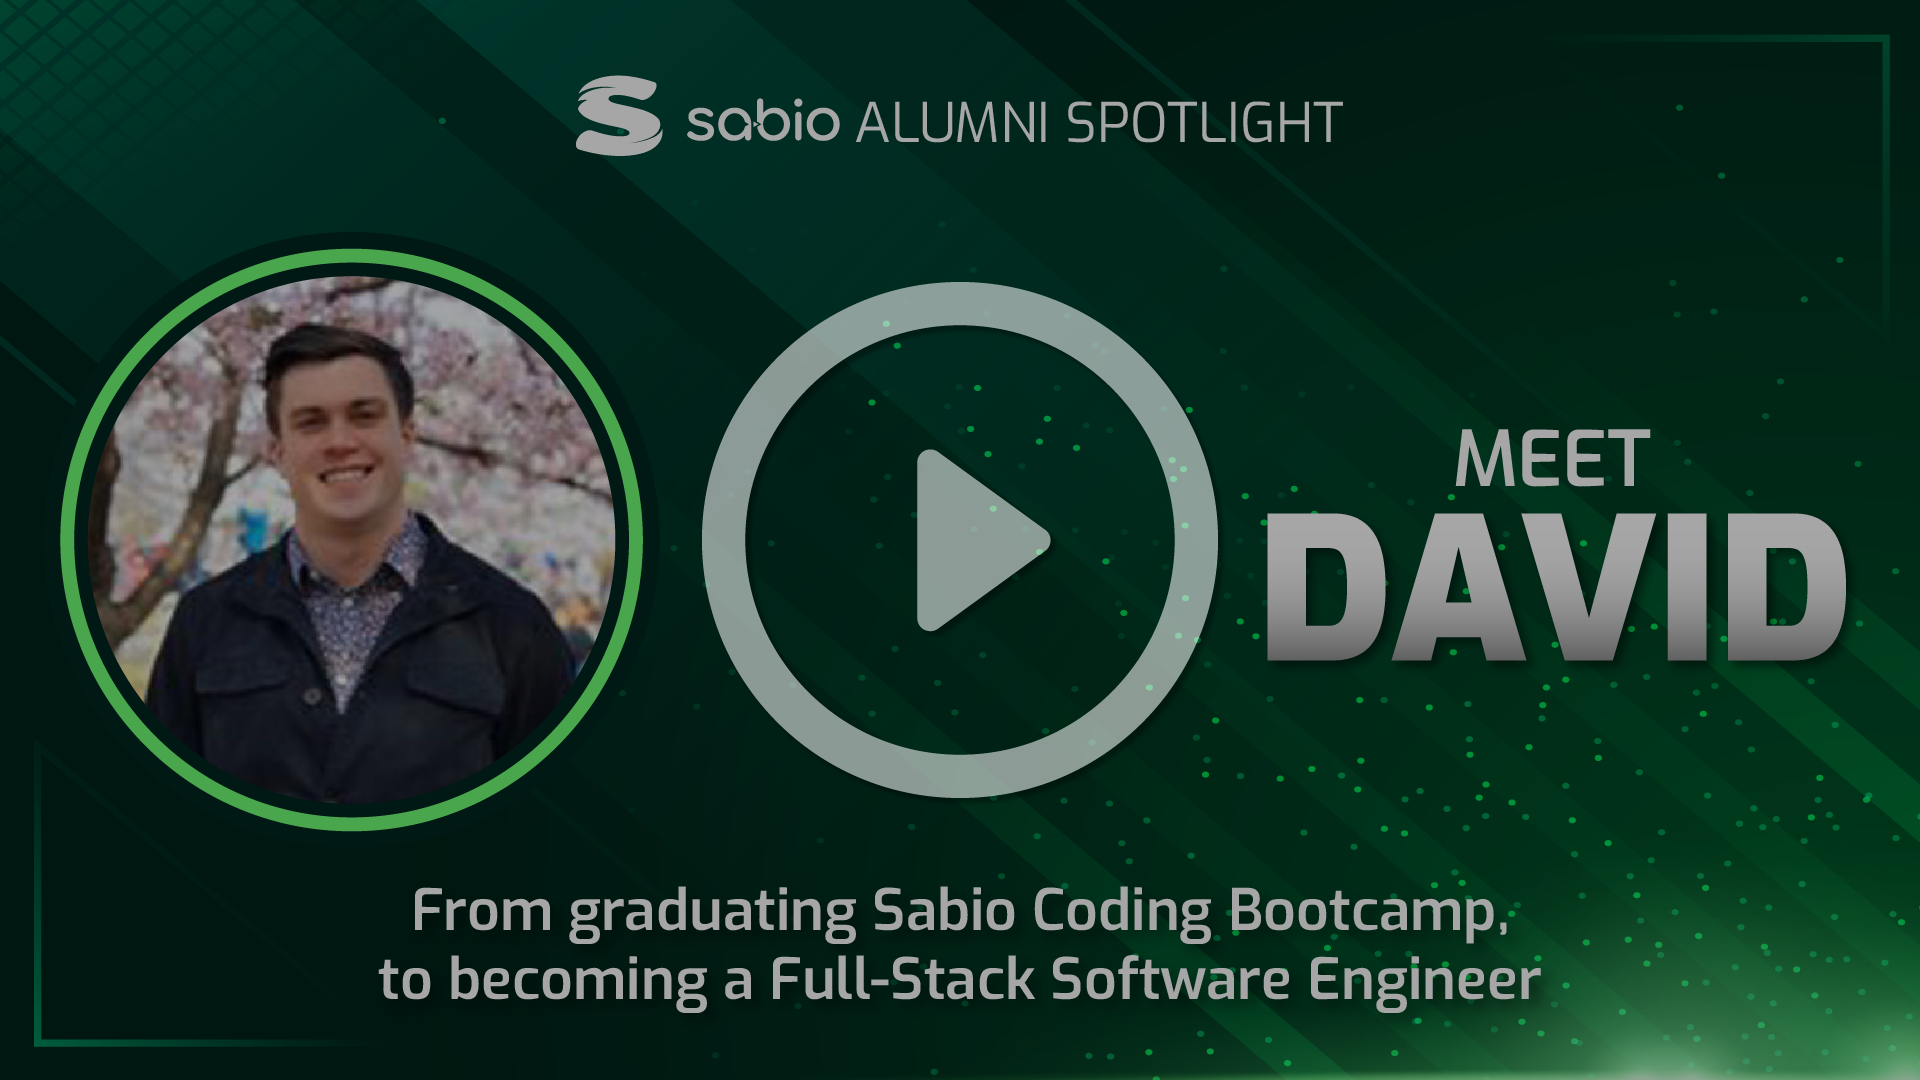 Sabio Alumni Spotlight: David. Play symbol overlaid to the image.